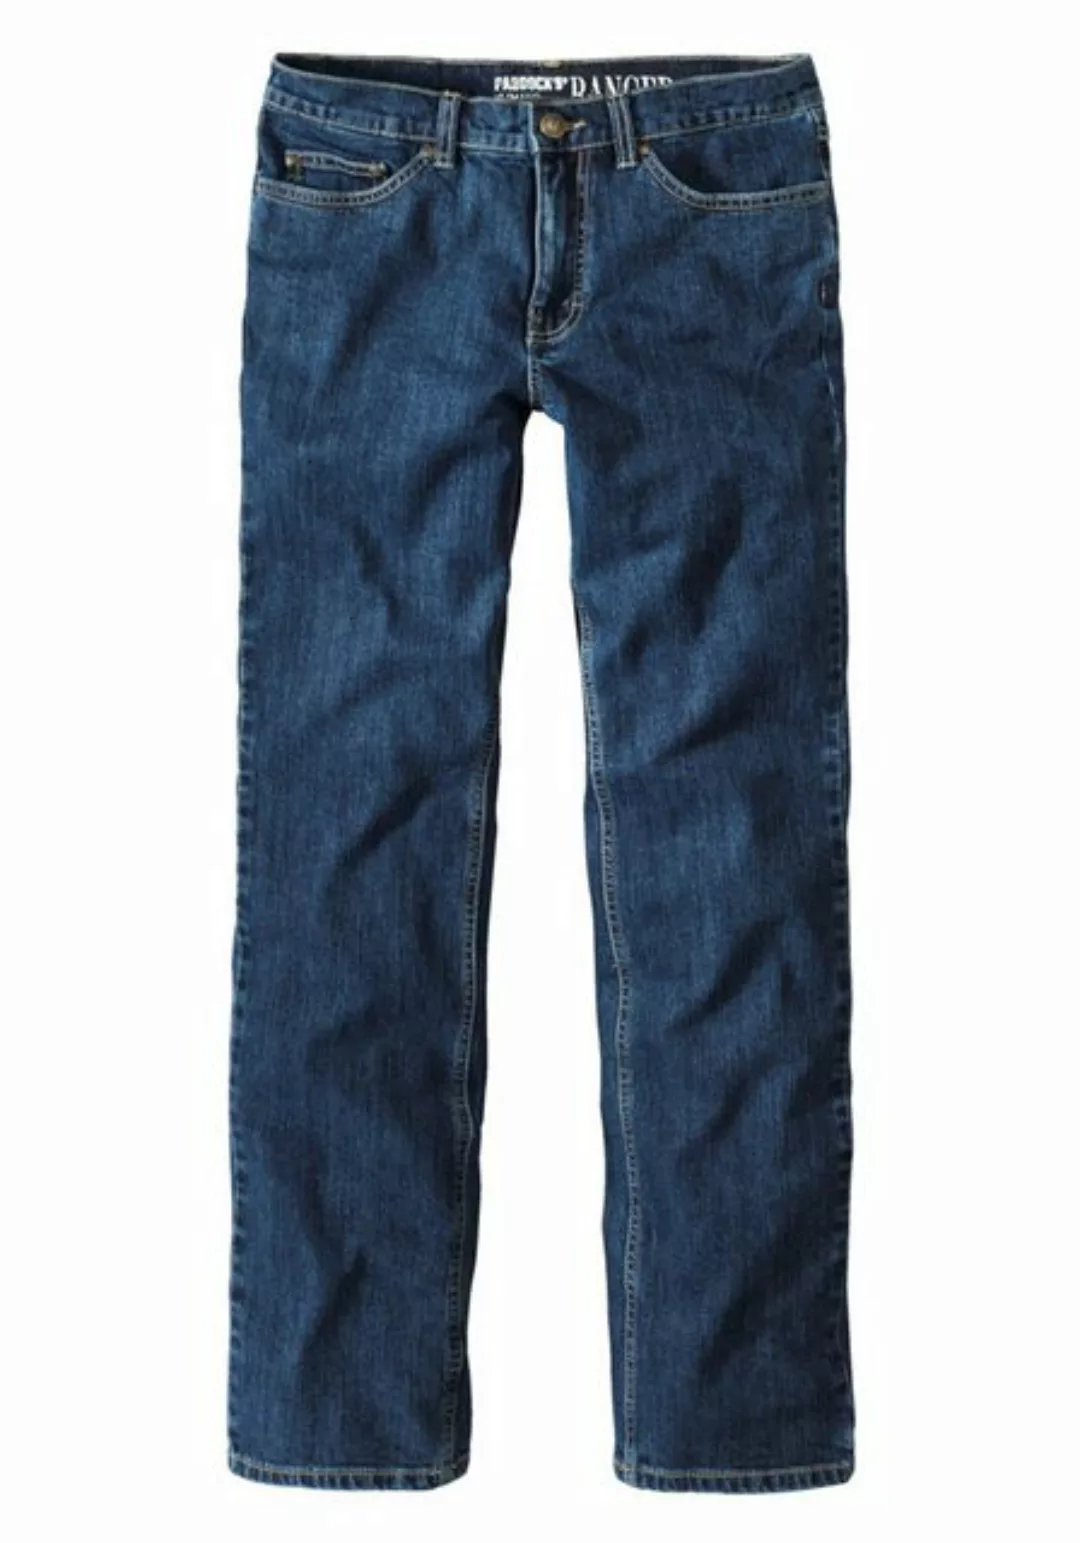 Paddock's 5-Pocket-Jeans PADDOCKS RANGER vintage blue rinse wash 80253 1628 günstig online kaufen